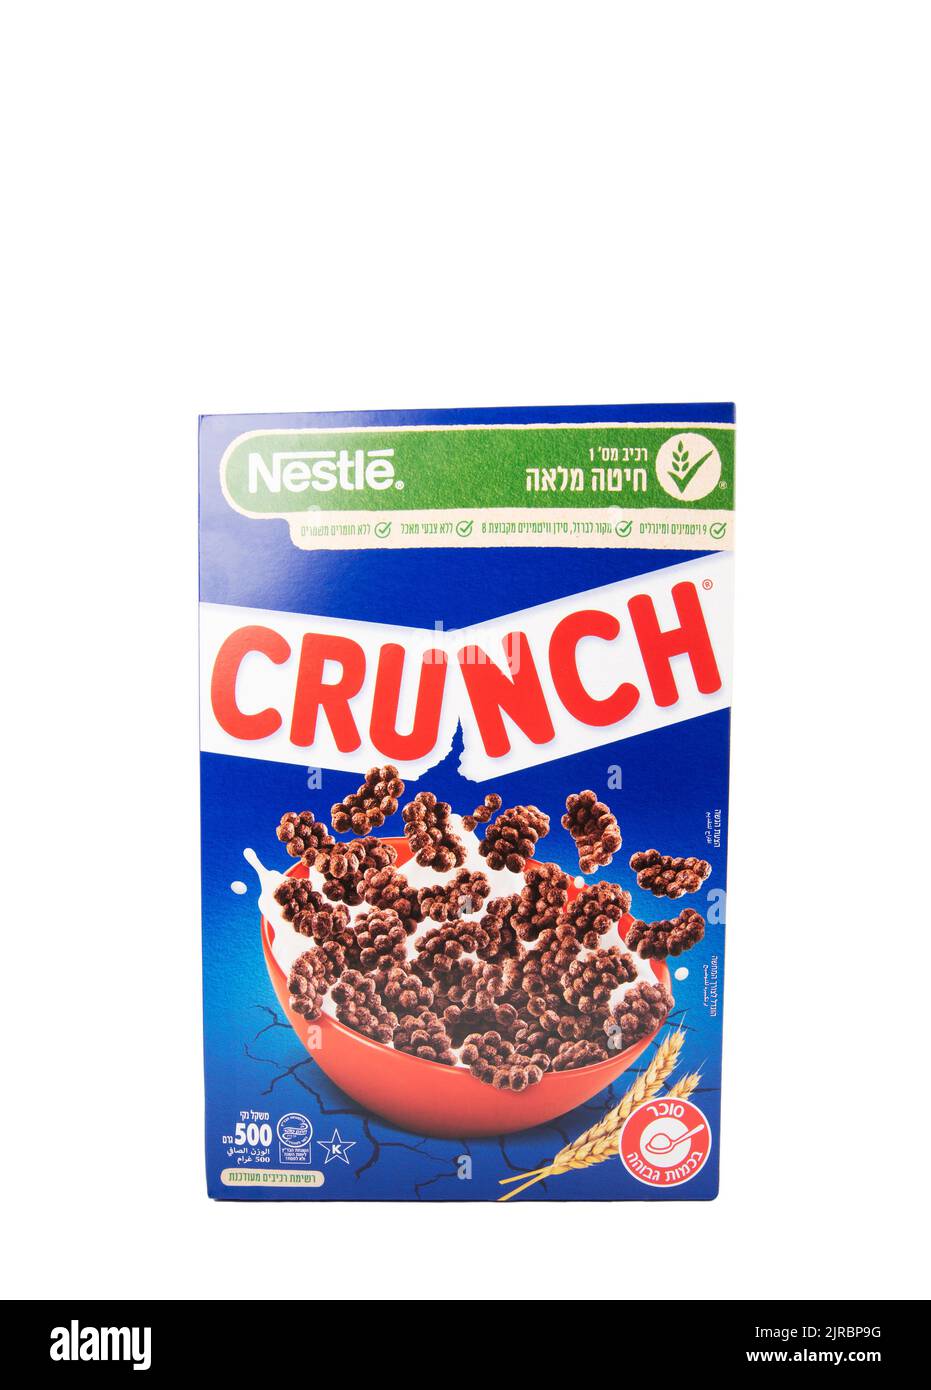 Nestlé - CRUNCH Cereal, 450g (15.9oz)